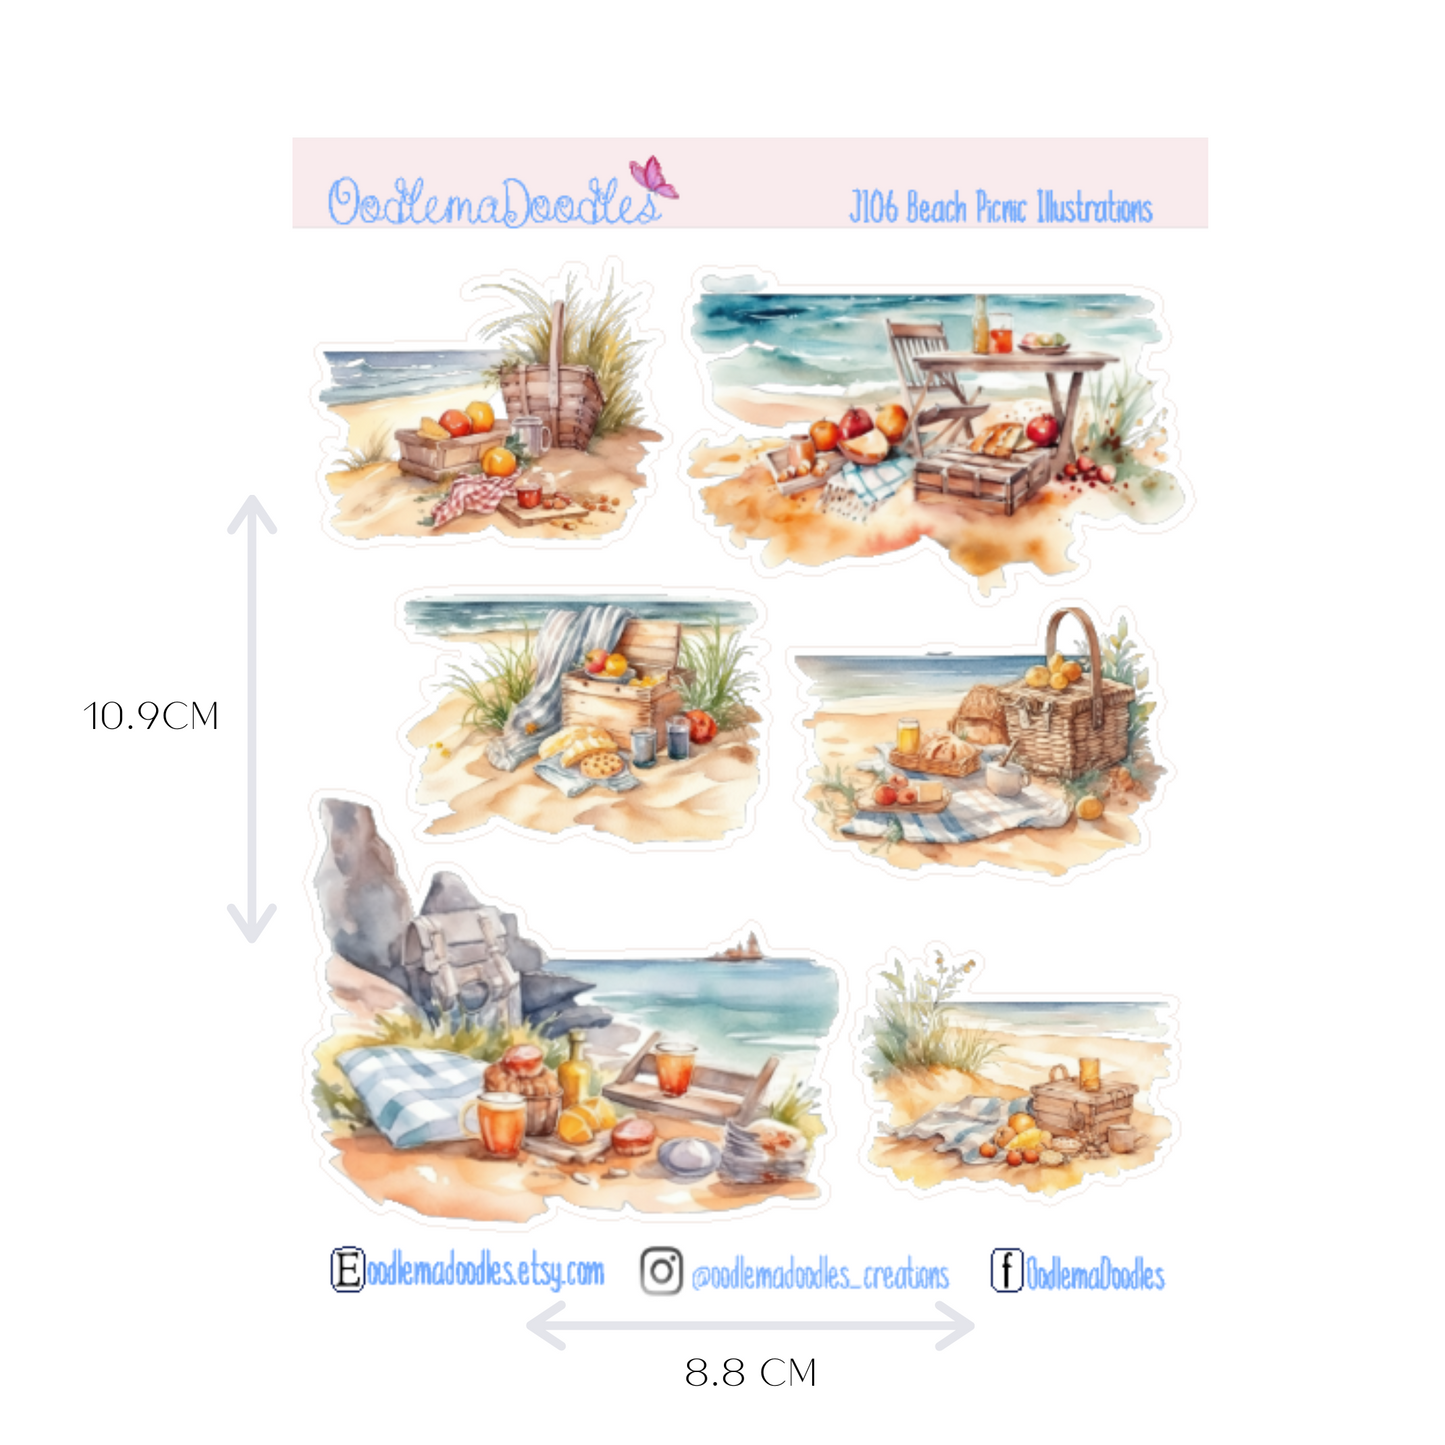 Beach Picnic Illustration Planner Stickers